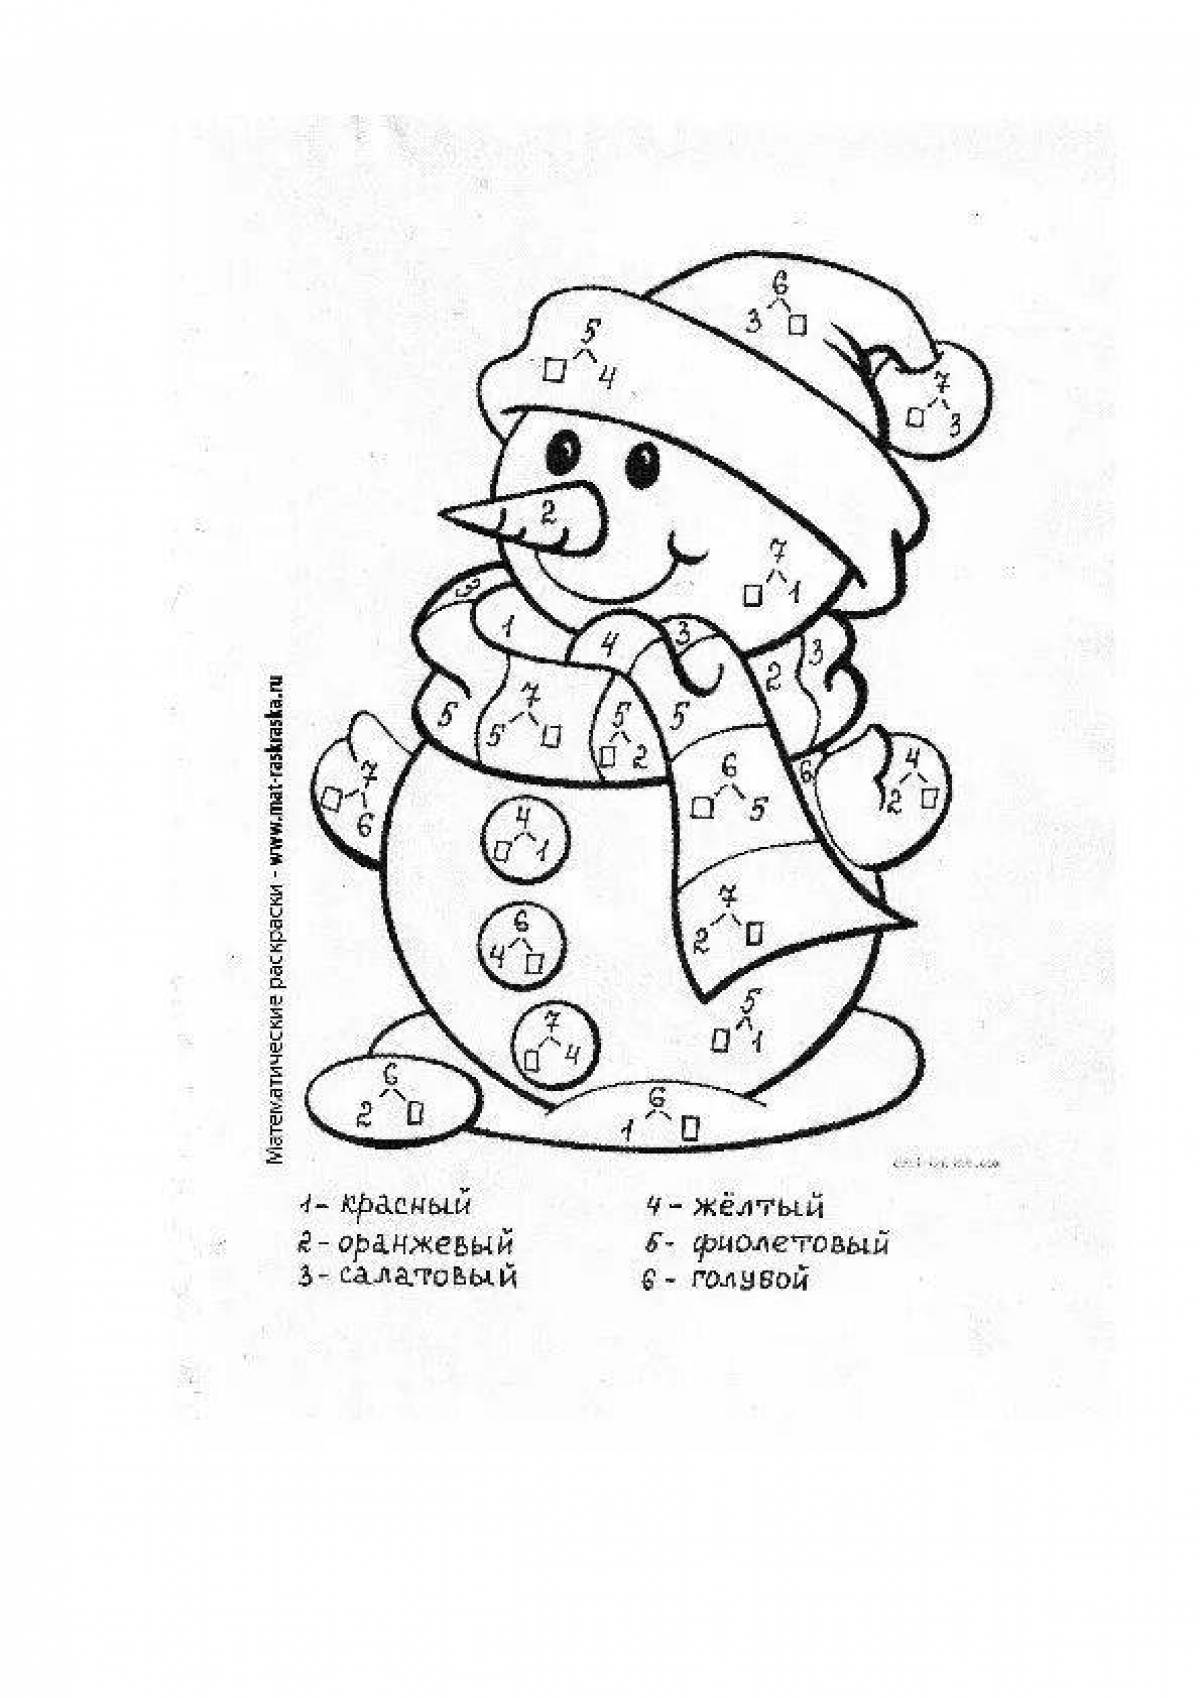 Playful Christmas math coloring book